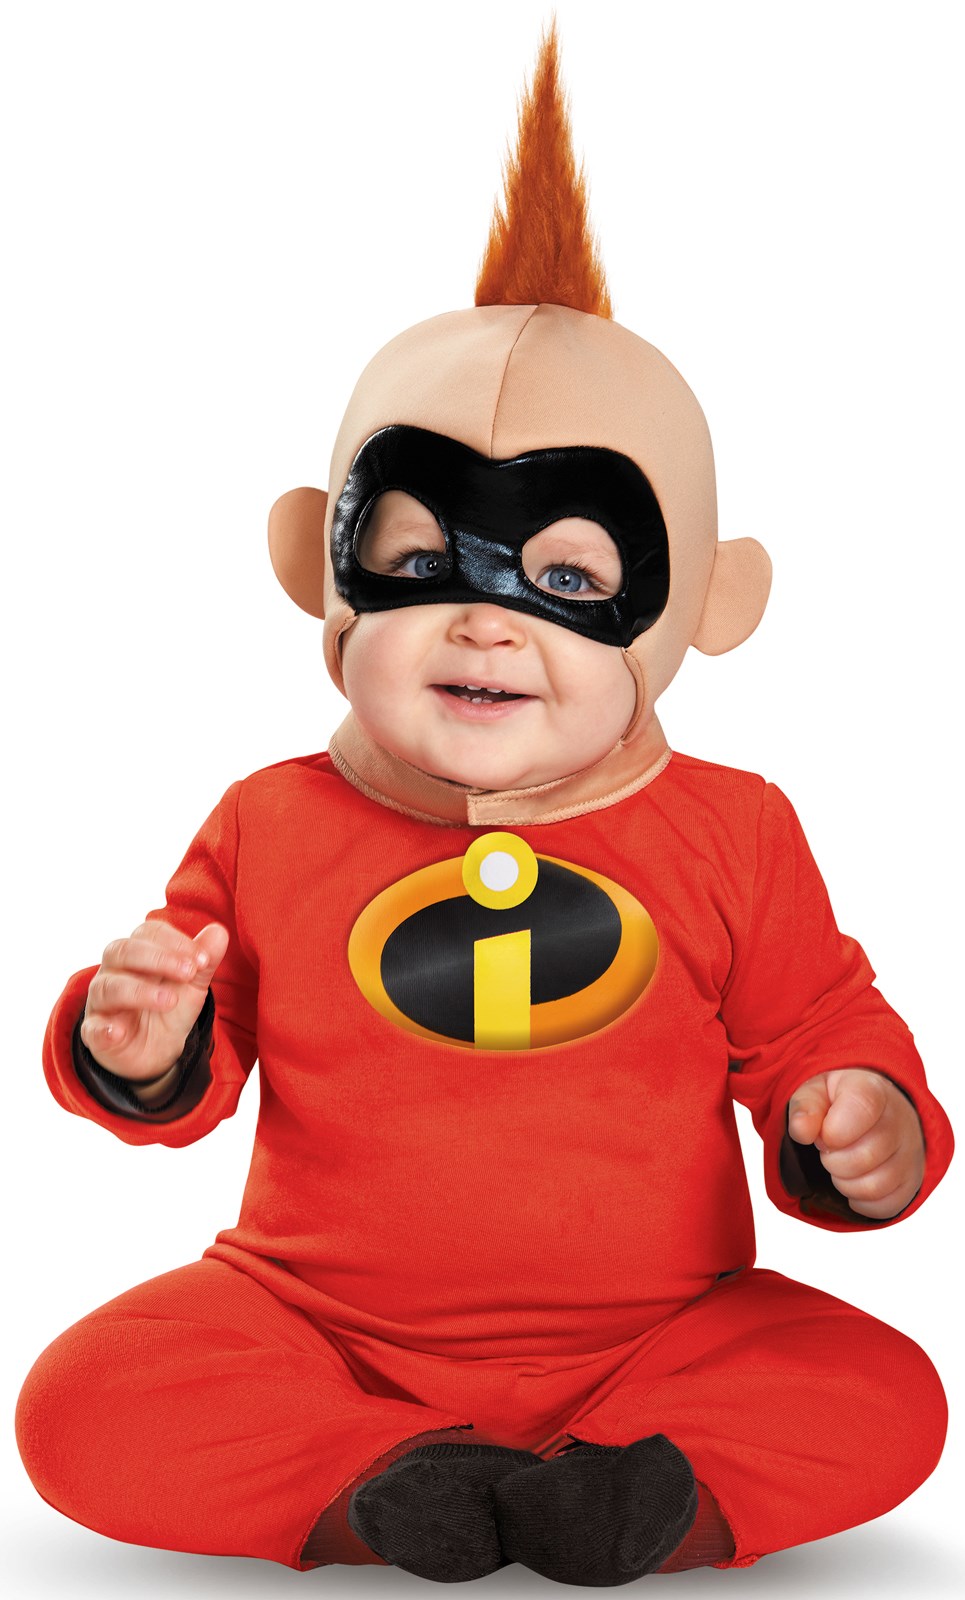 Disneys the Incredibles: Baby Jack Jack Deluxe Costume For Babies